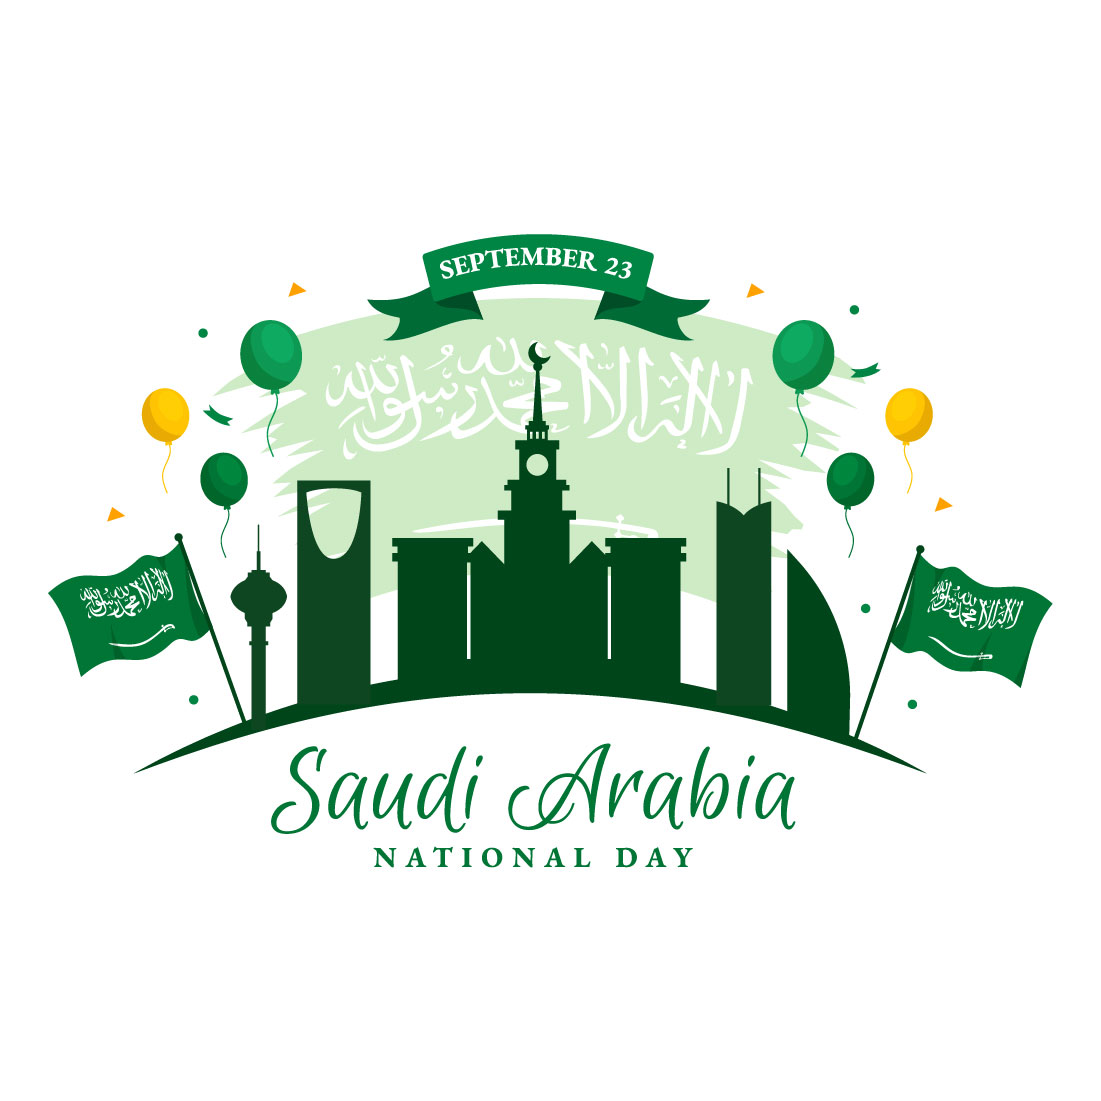 17 Saudi Arabia National Day Illustration preview image.